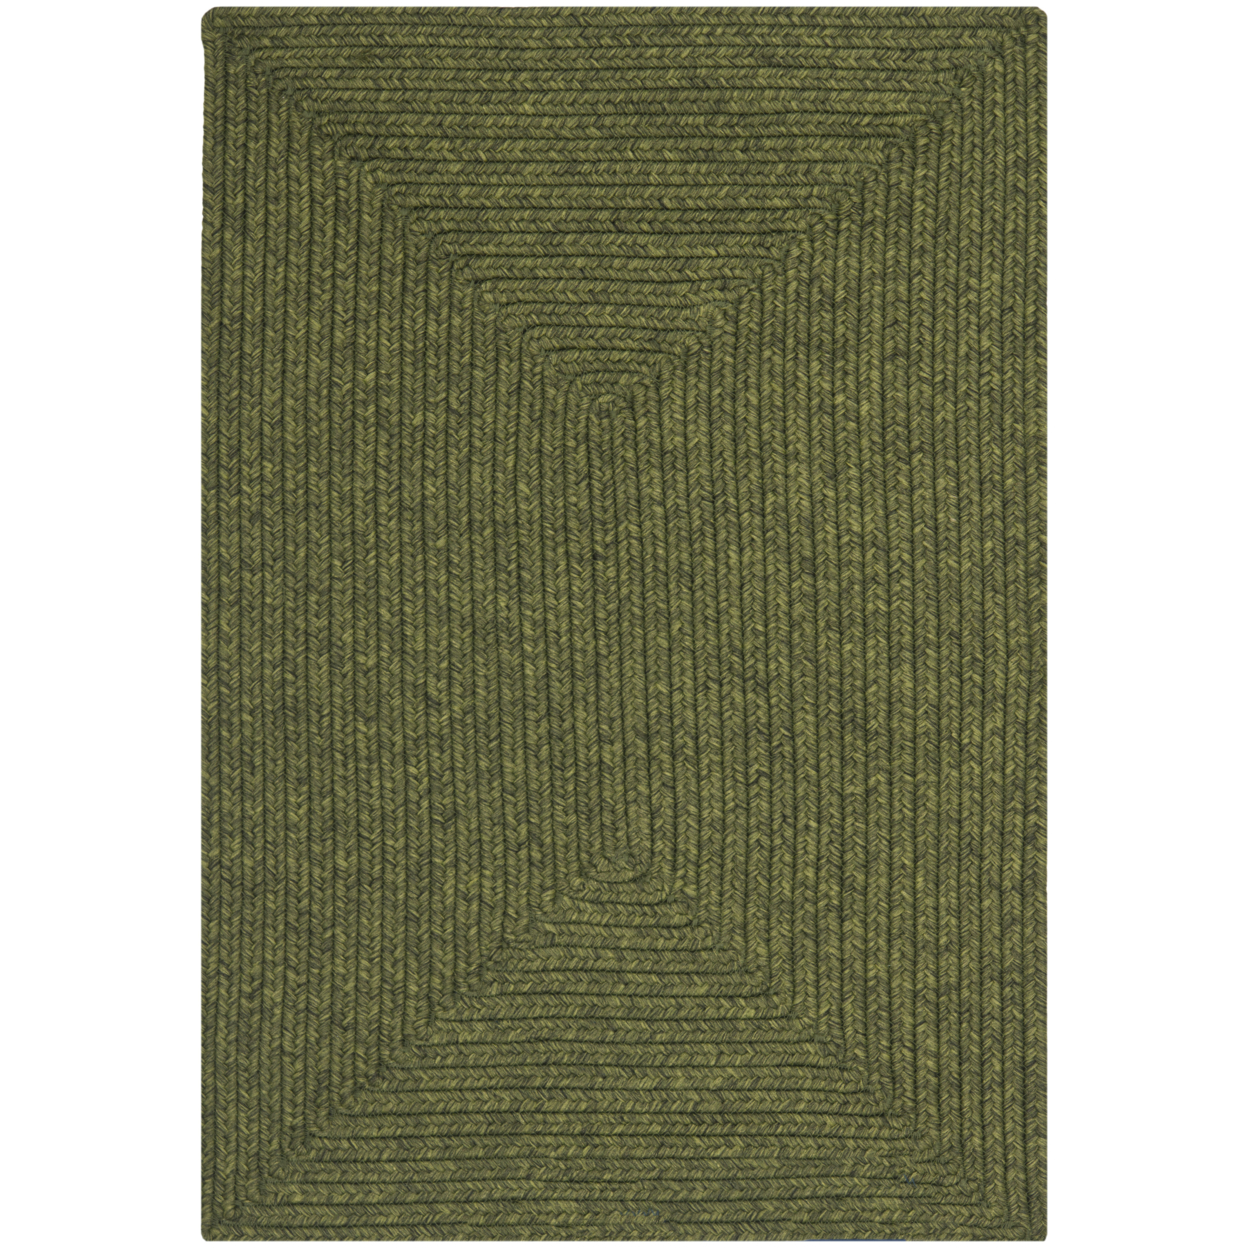 SAFAVIEH Braided Rishika Solid Area Rug, Green, 5' x 8' Oval - image 3 of 10